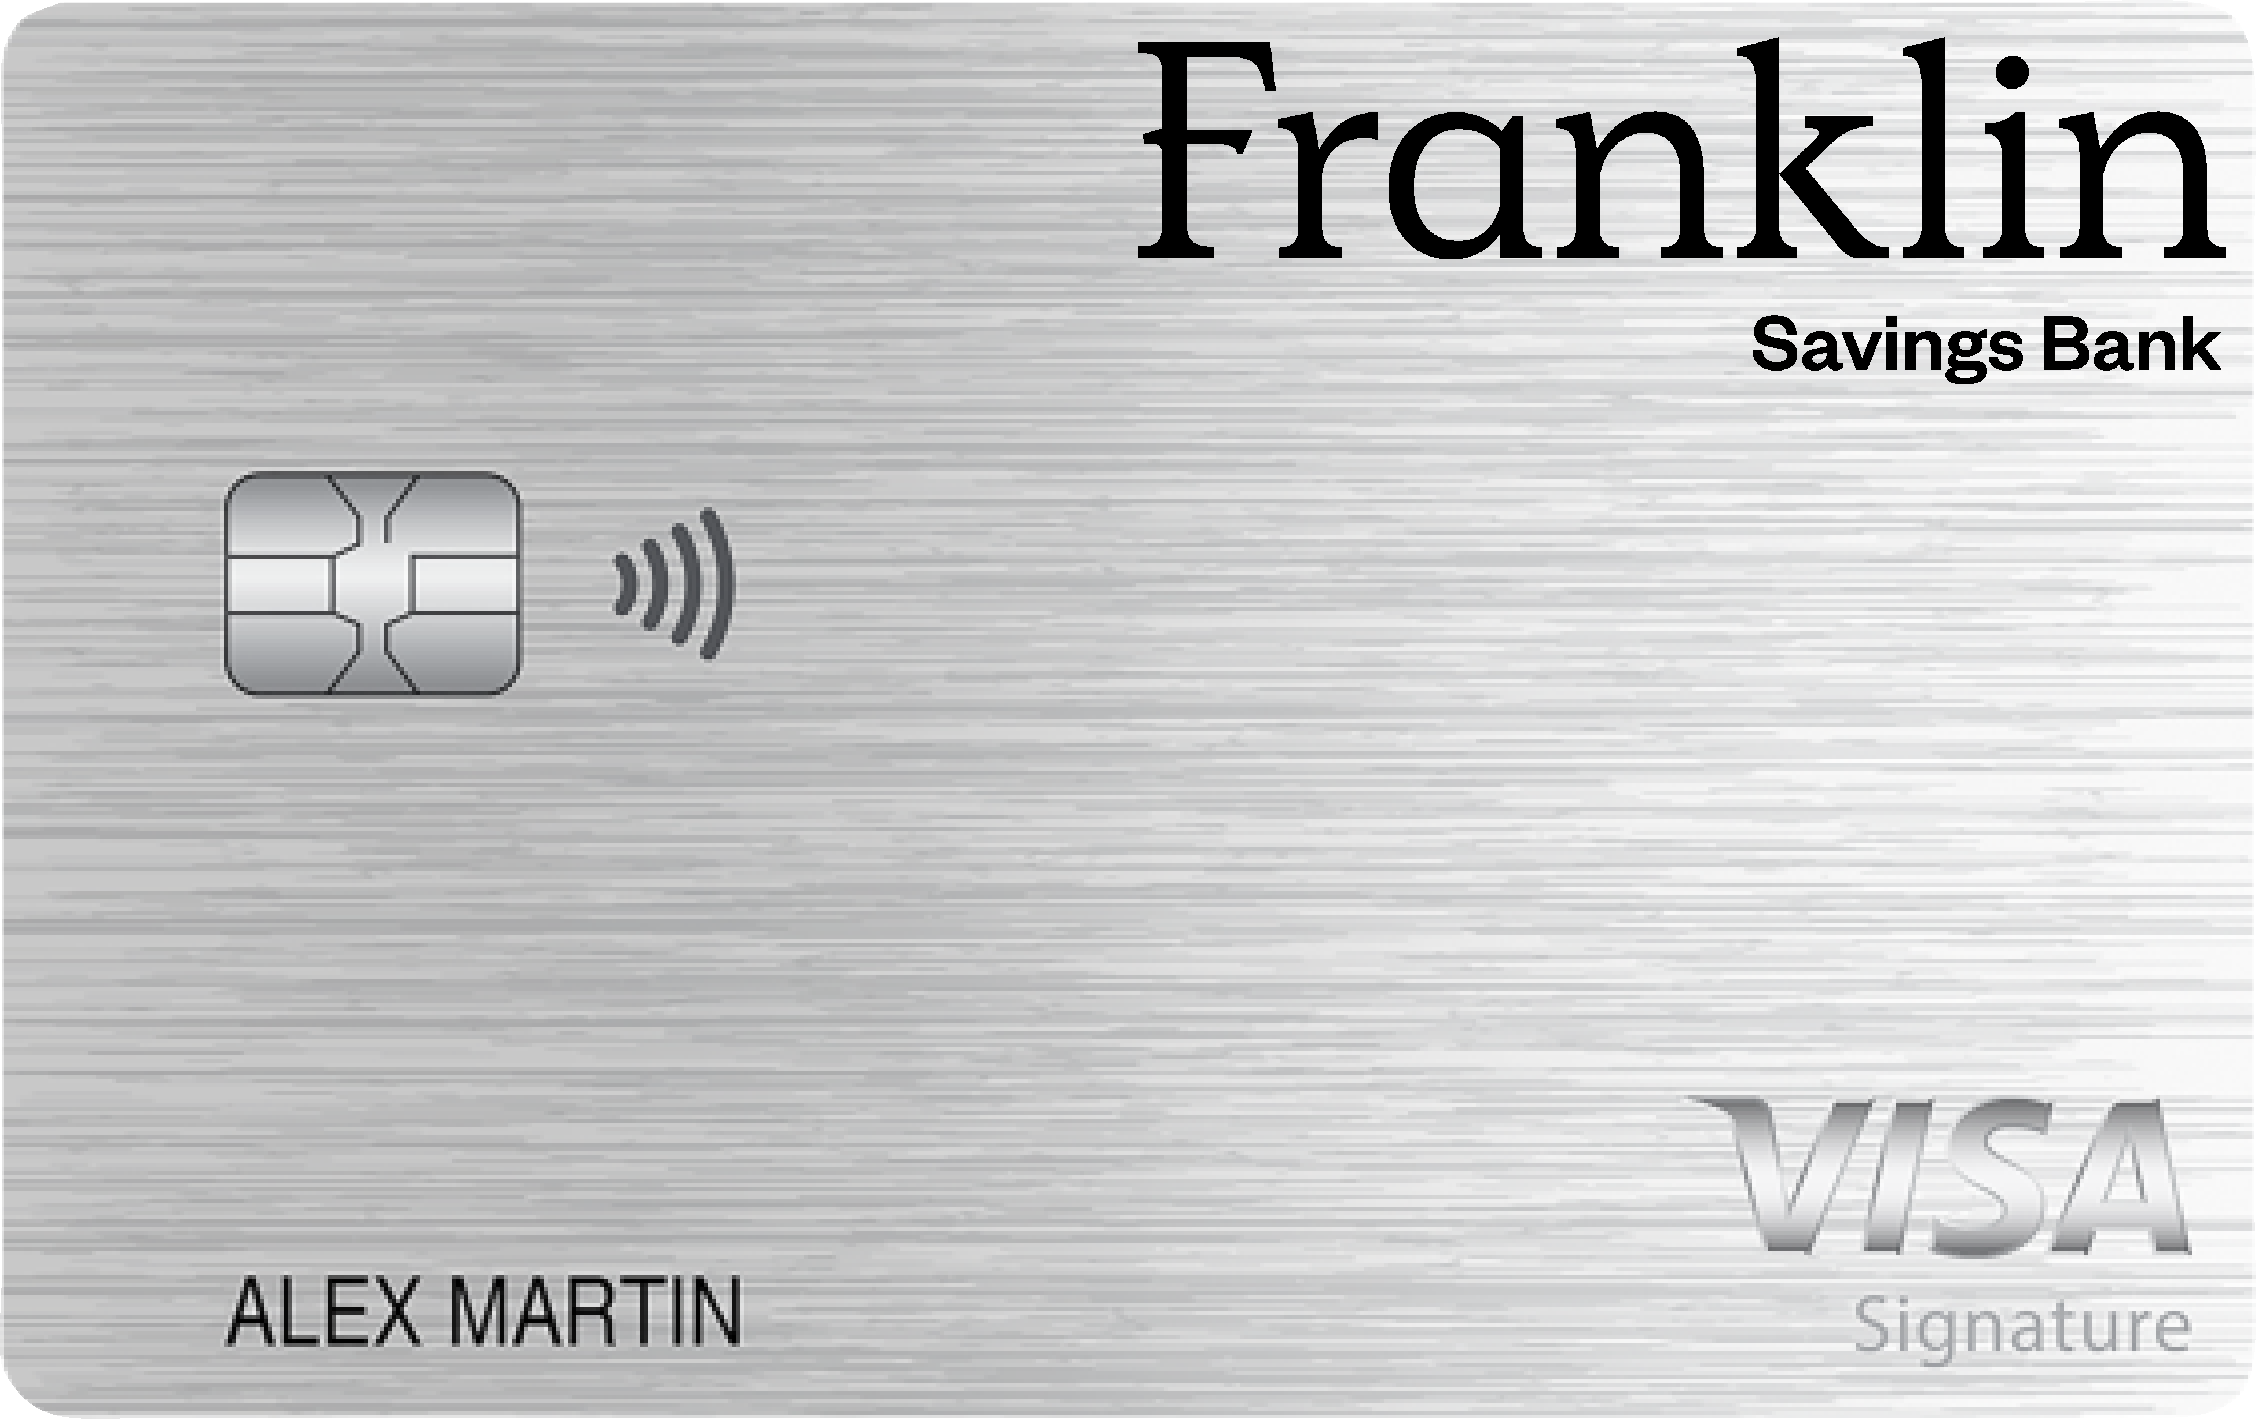 Franklin Savings Bank Travel Rewards+ Card